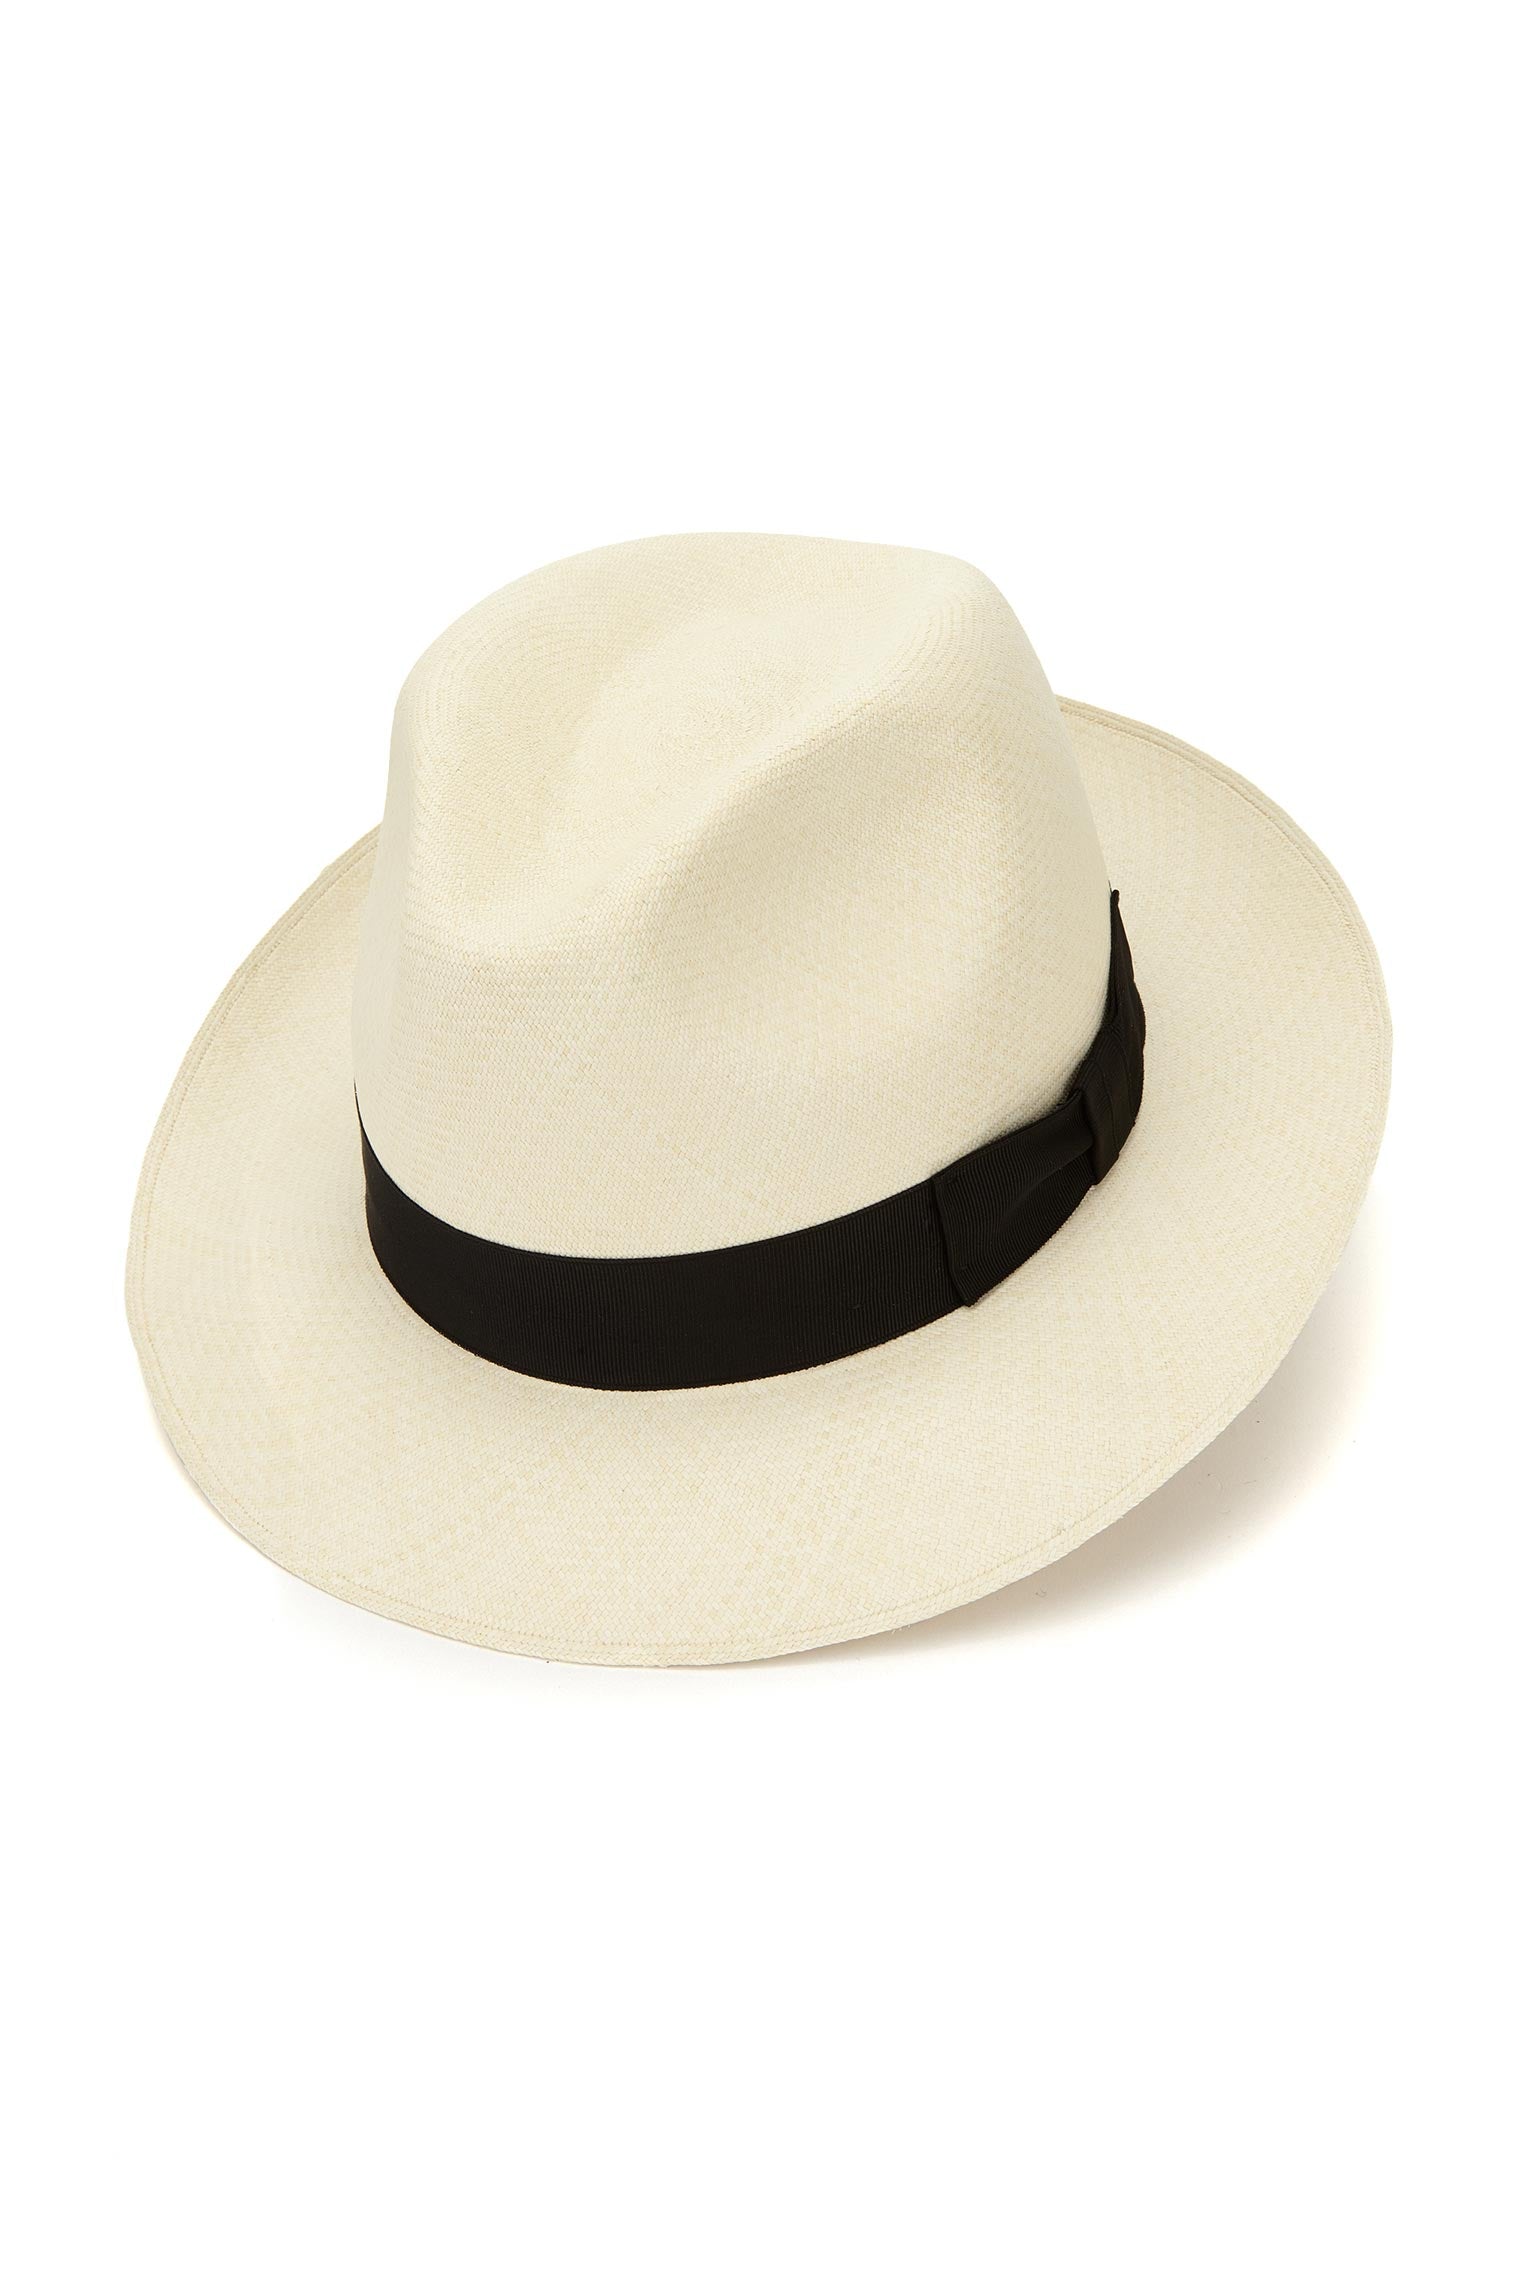 Superfino Montecristi Panama - Panamas, Straw and Sun Hats for Men - Lock & Co. Hatters London UK